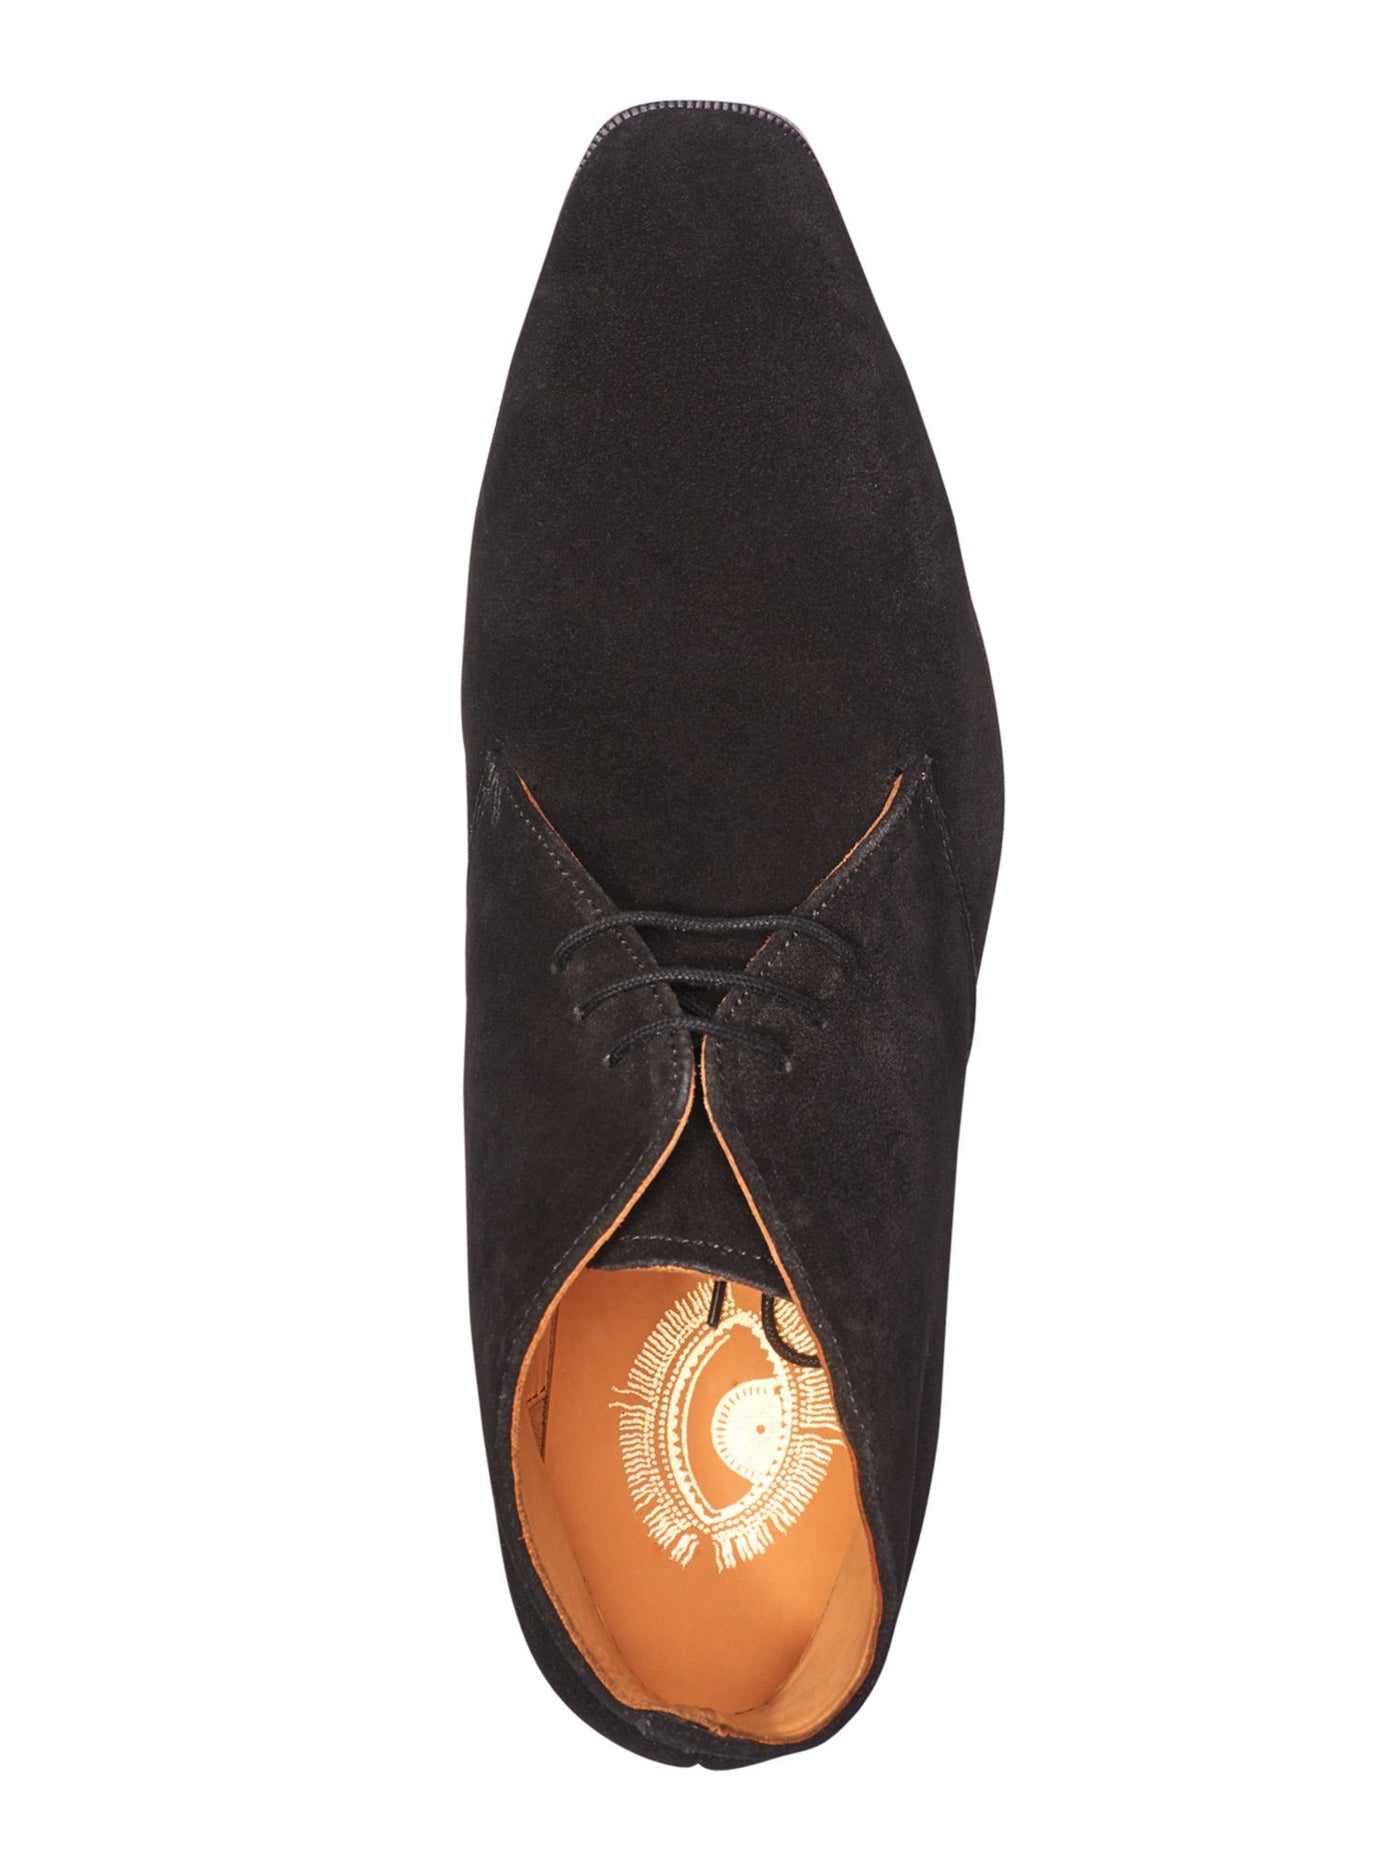 CARLOS BY CARLOS SANTANA Mens Black Padded Corazon Square Toe Block Heel Lace-Up Leather Chukka Boots 10.5 D